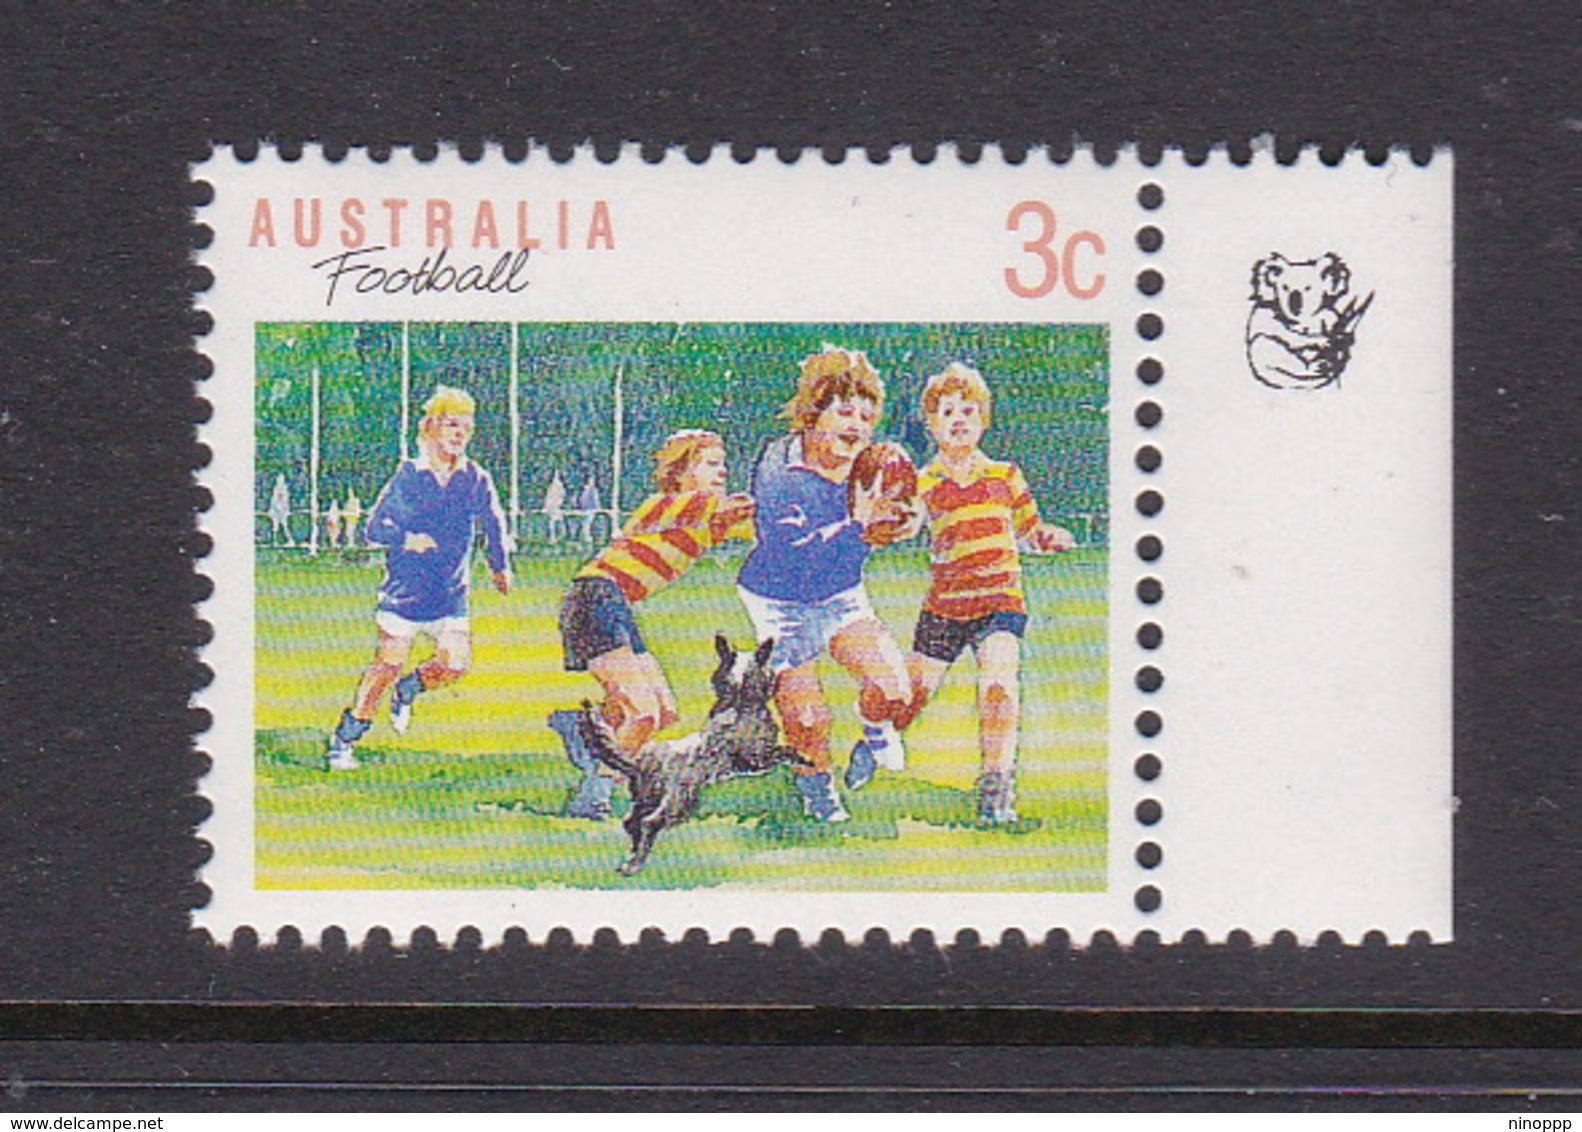 Australia ASC 1184a 1989 Sports 3c Football 1 Koala Reprint,mint Never Hinged - Proofs & Reprints